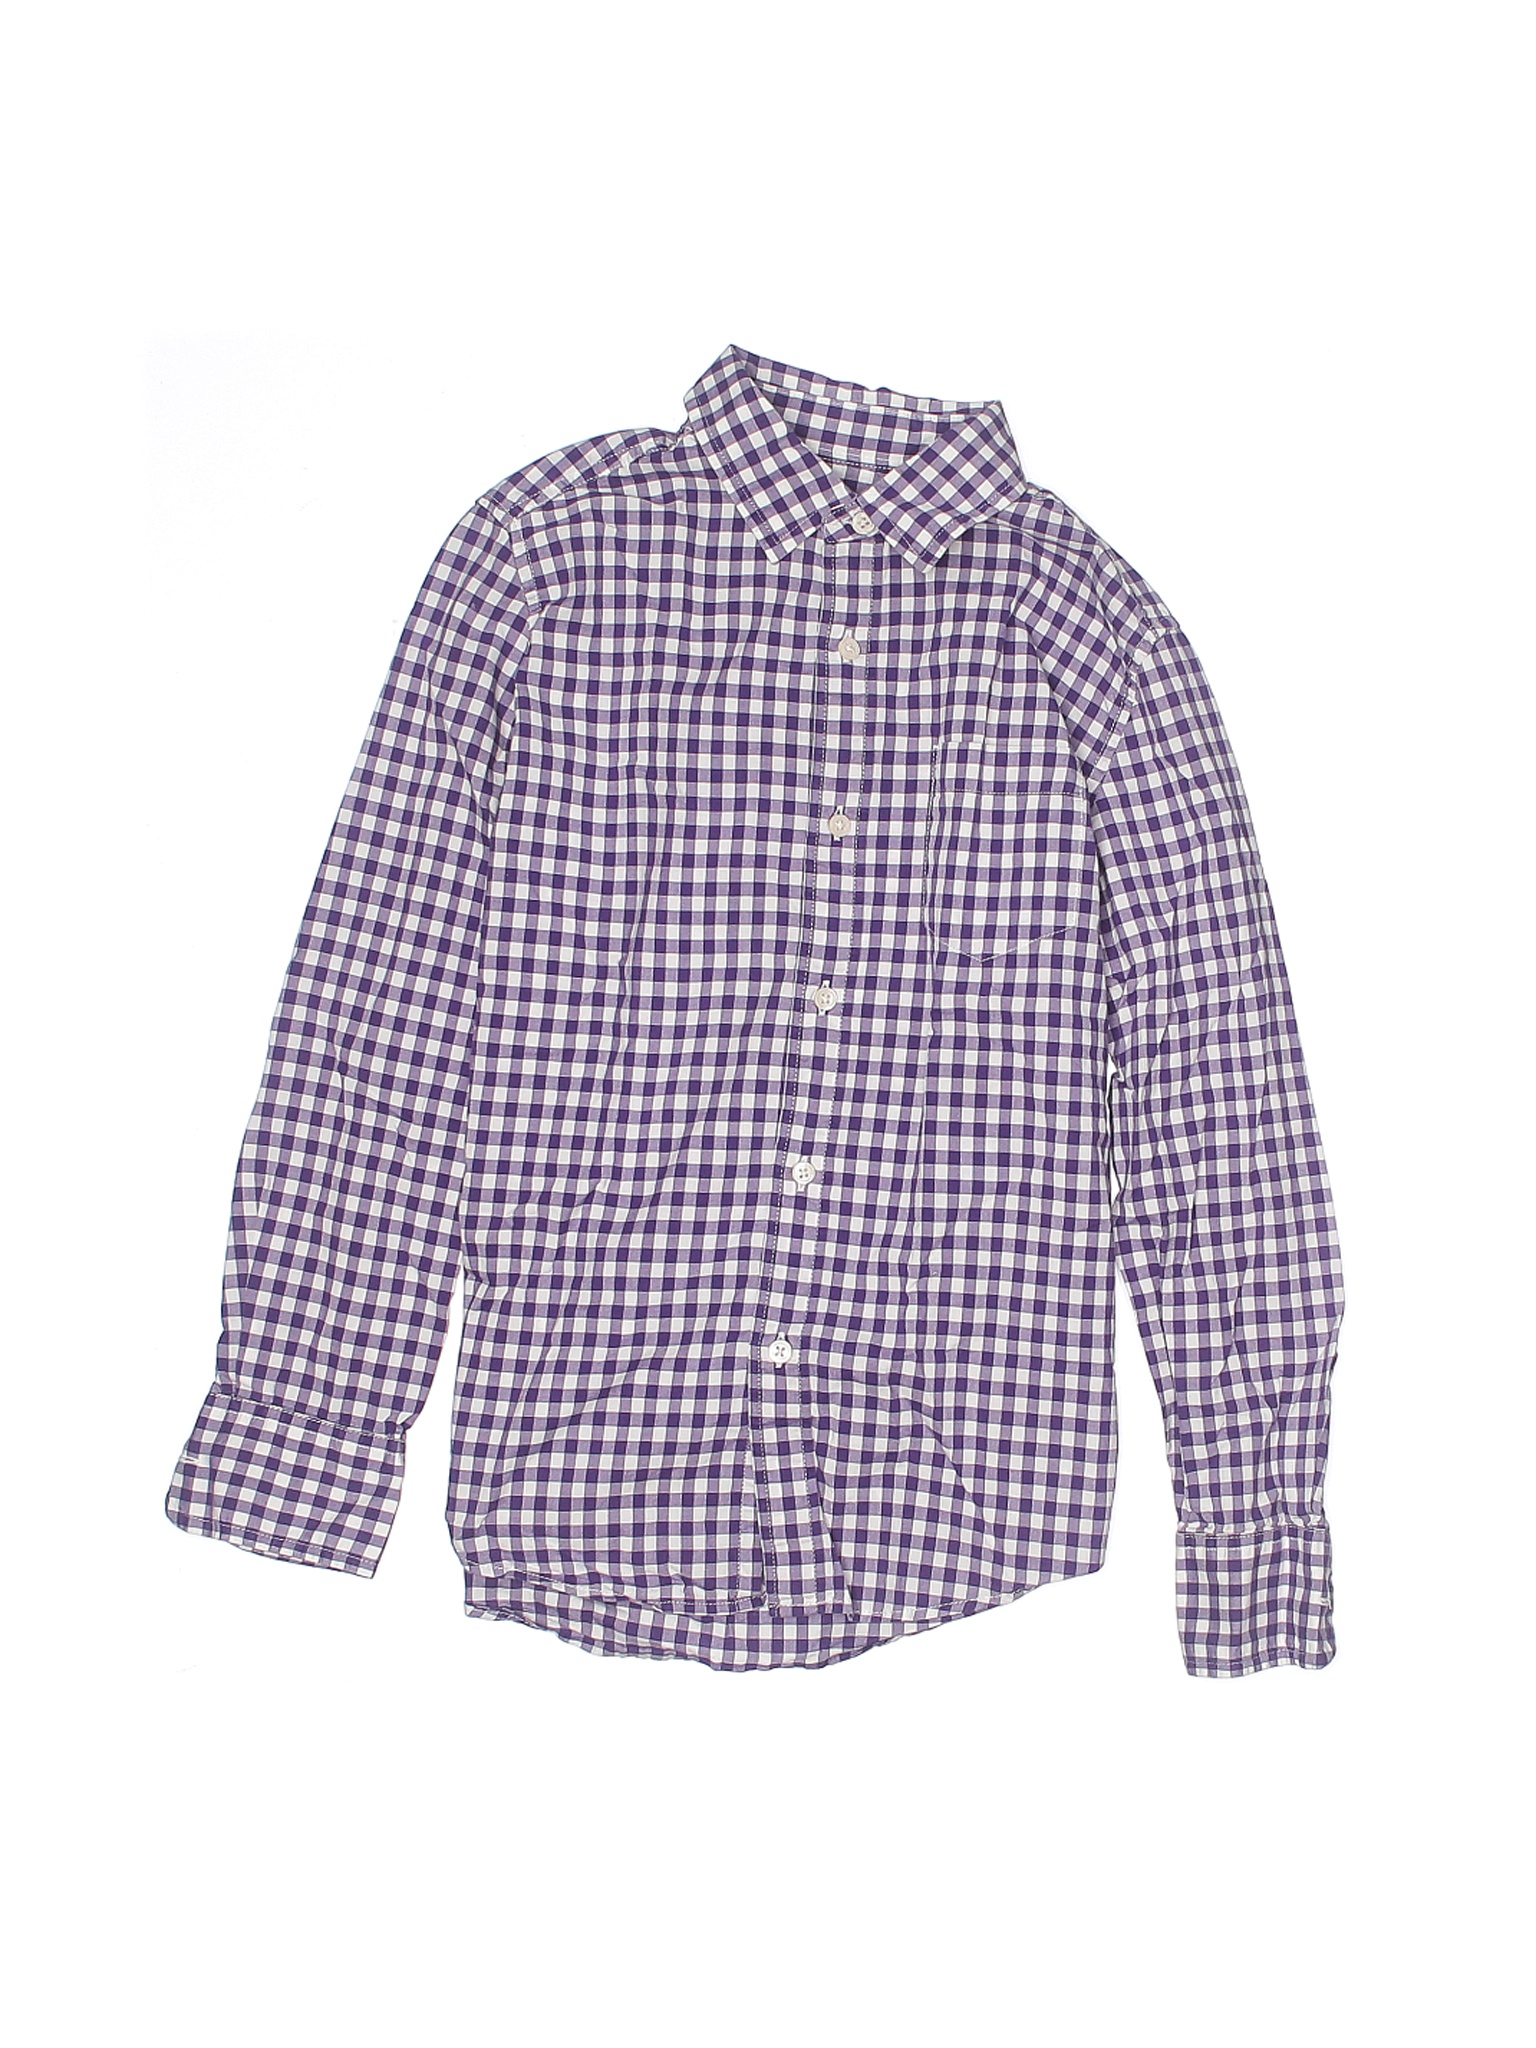 Crewcuts Boys Purple Long Sleeve Button-Down Shirt 10 | eBay